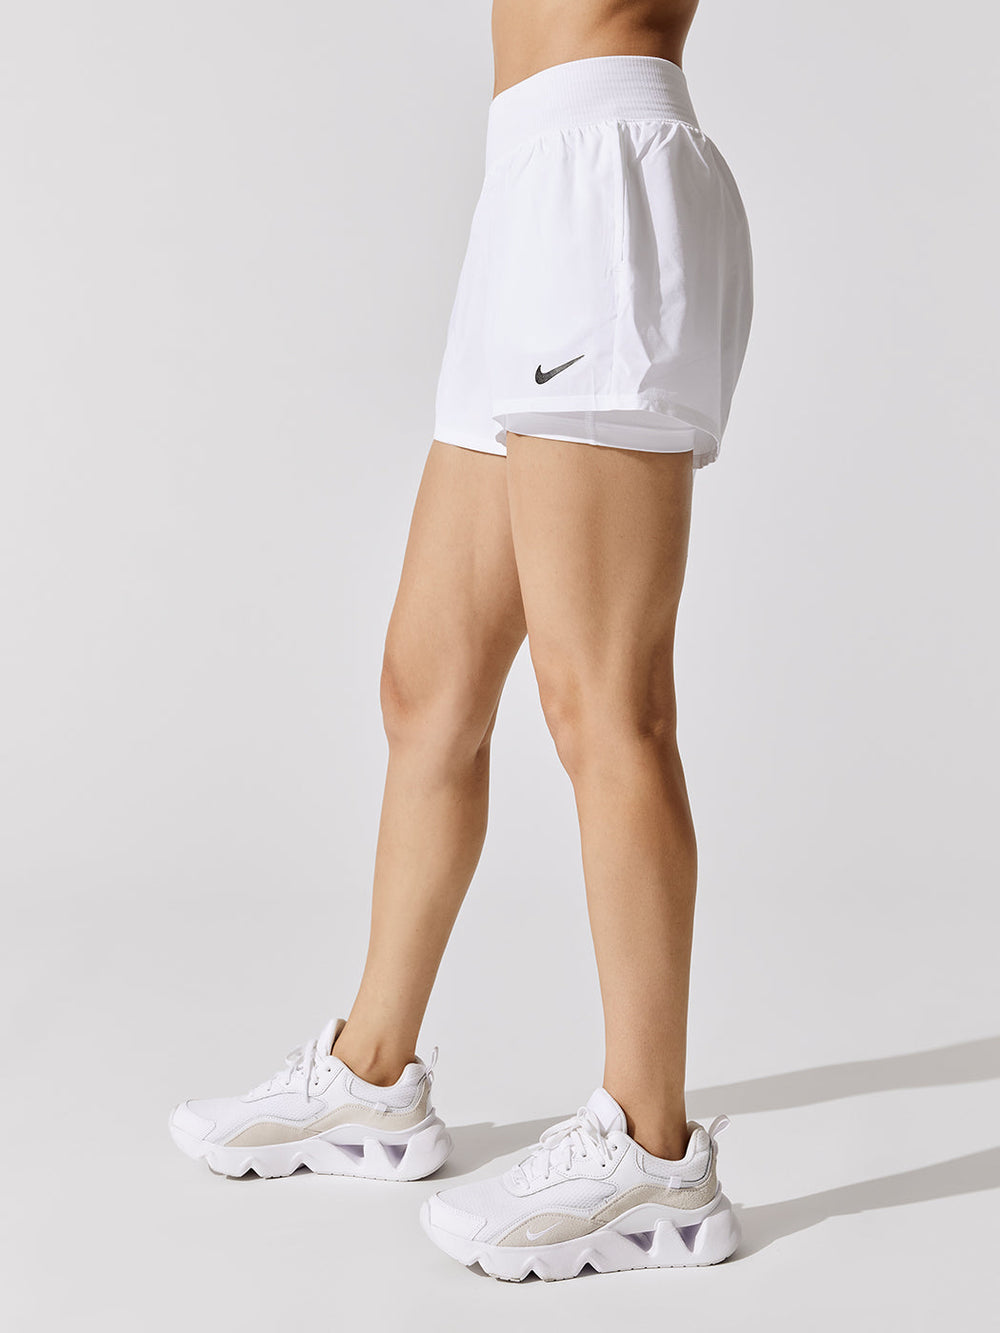 Short Nike x Supreme White size 34 UK - US in Polyester - 41161428